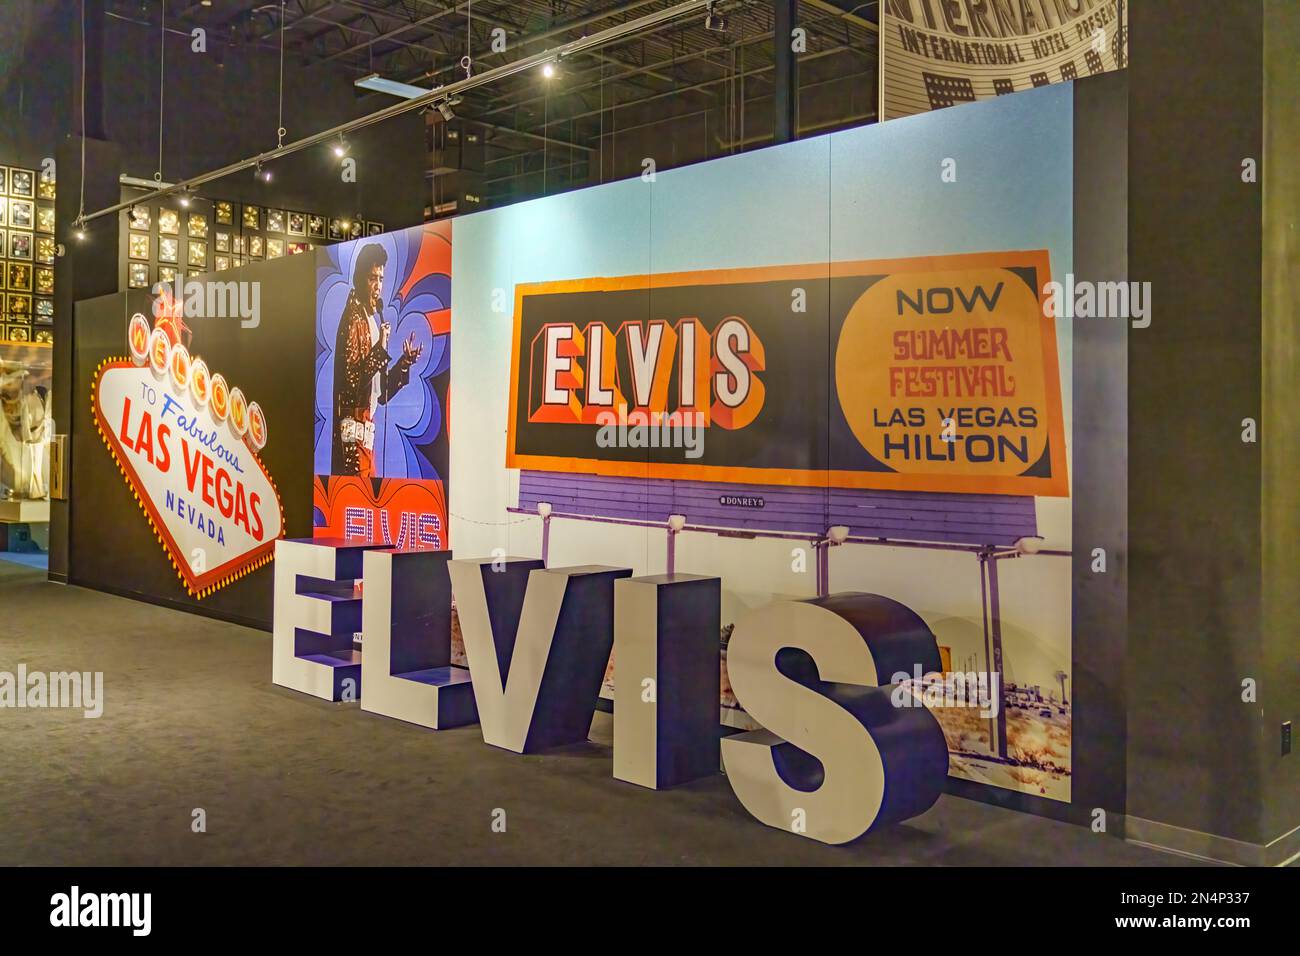 Elvis in Las Vegas Mostra nel complesso di intrattenimento Memphis di Elvis Presley a Graceland a Memphis, Tennessee. Foto Stock